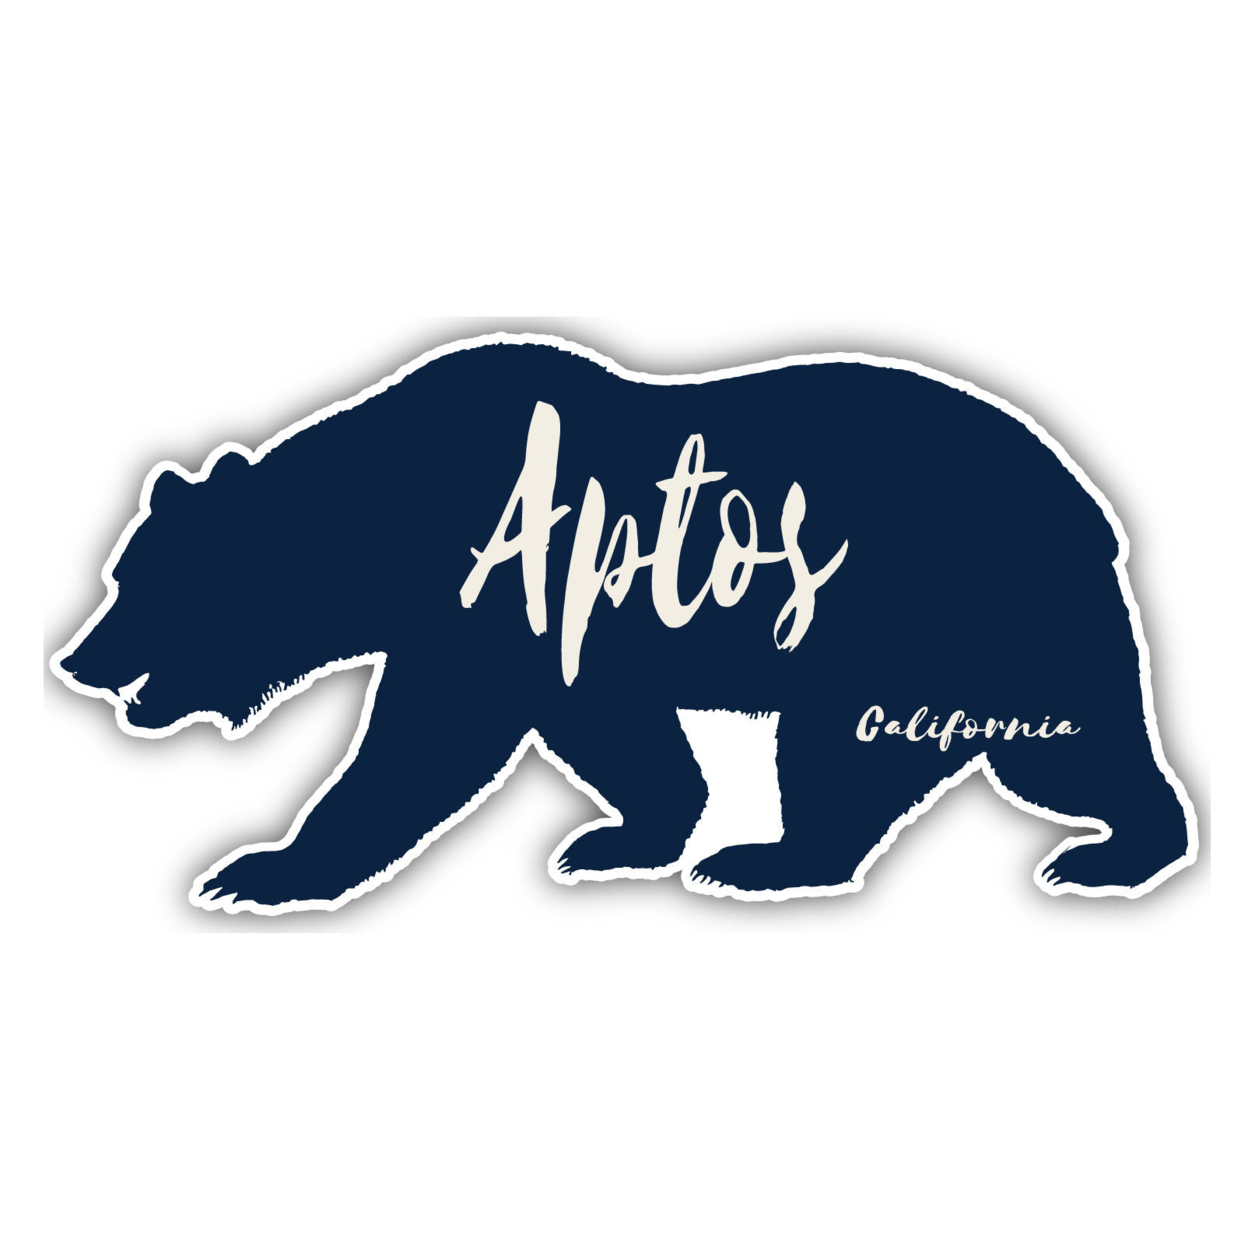 Aptos California Souvenir Decorative Stickers (Choose Theme And Size) - 4-Pack, 10-Inch, Bear